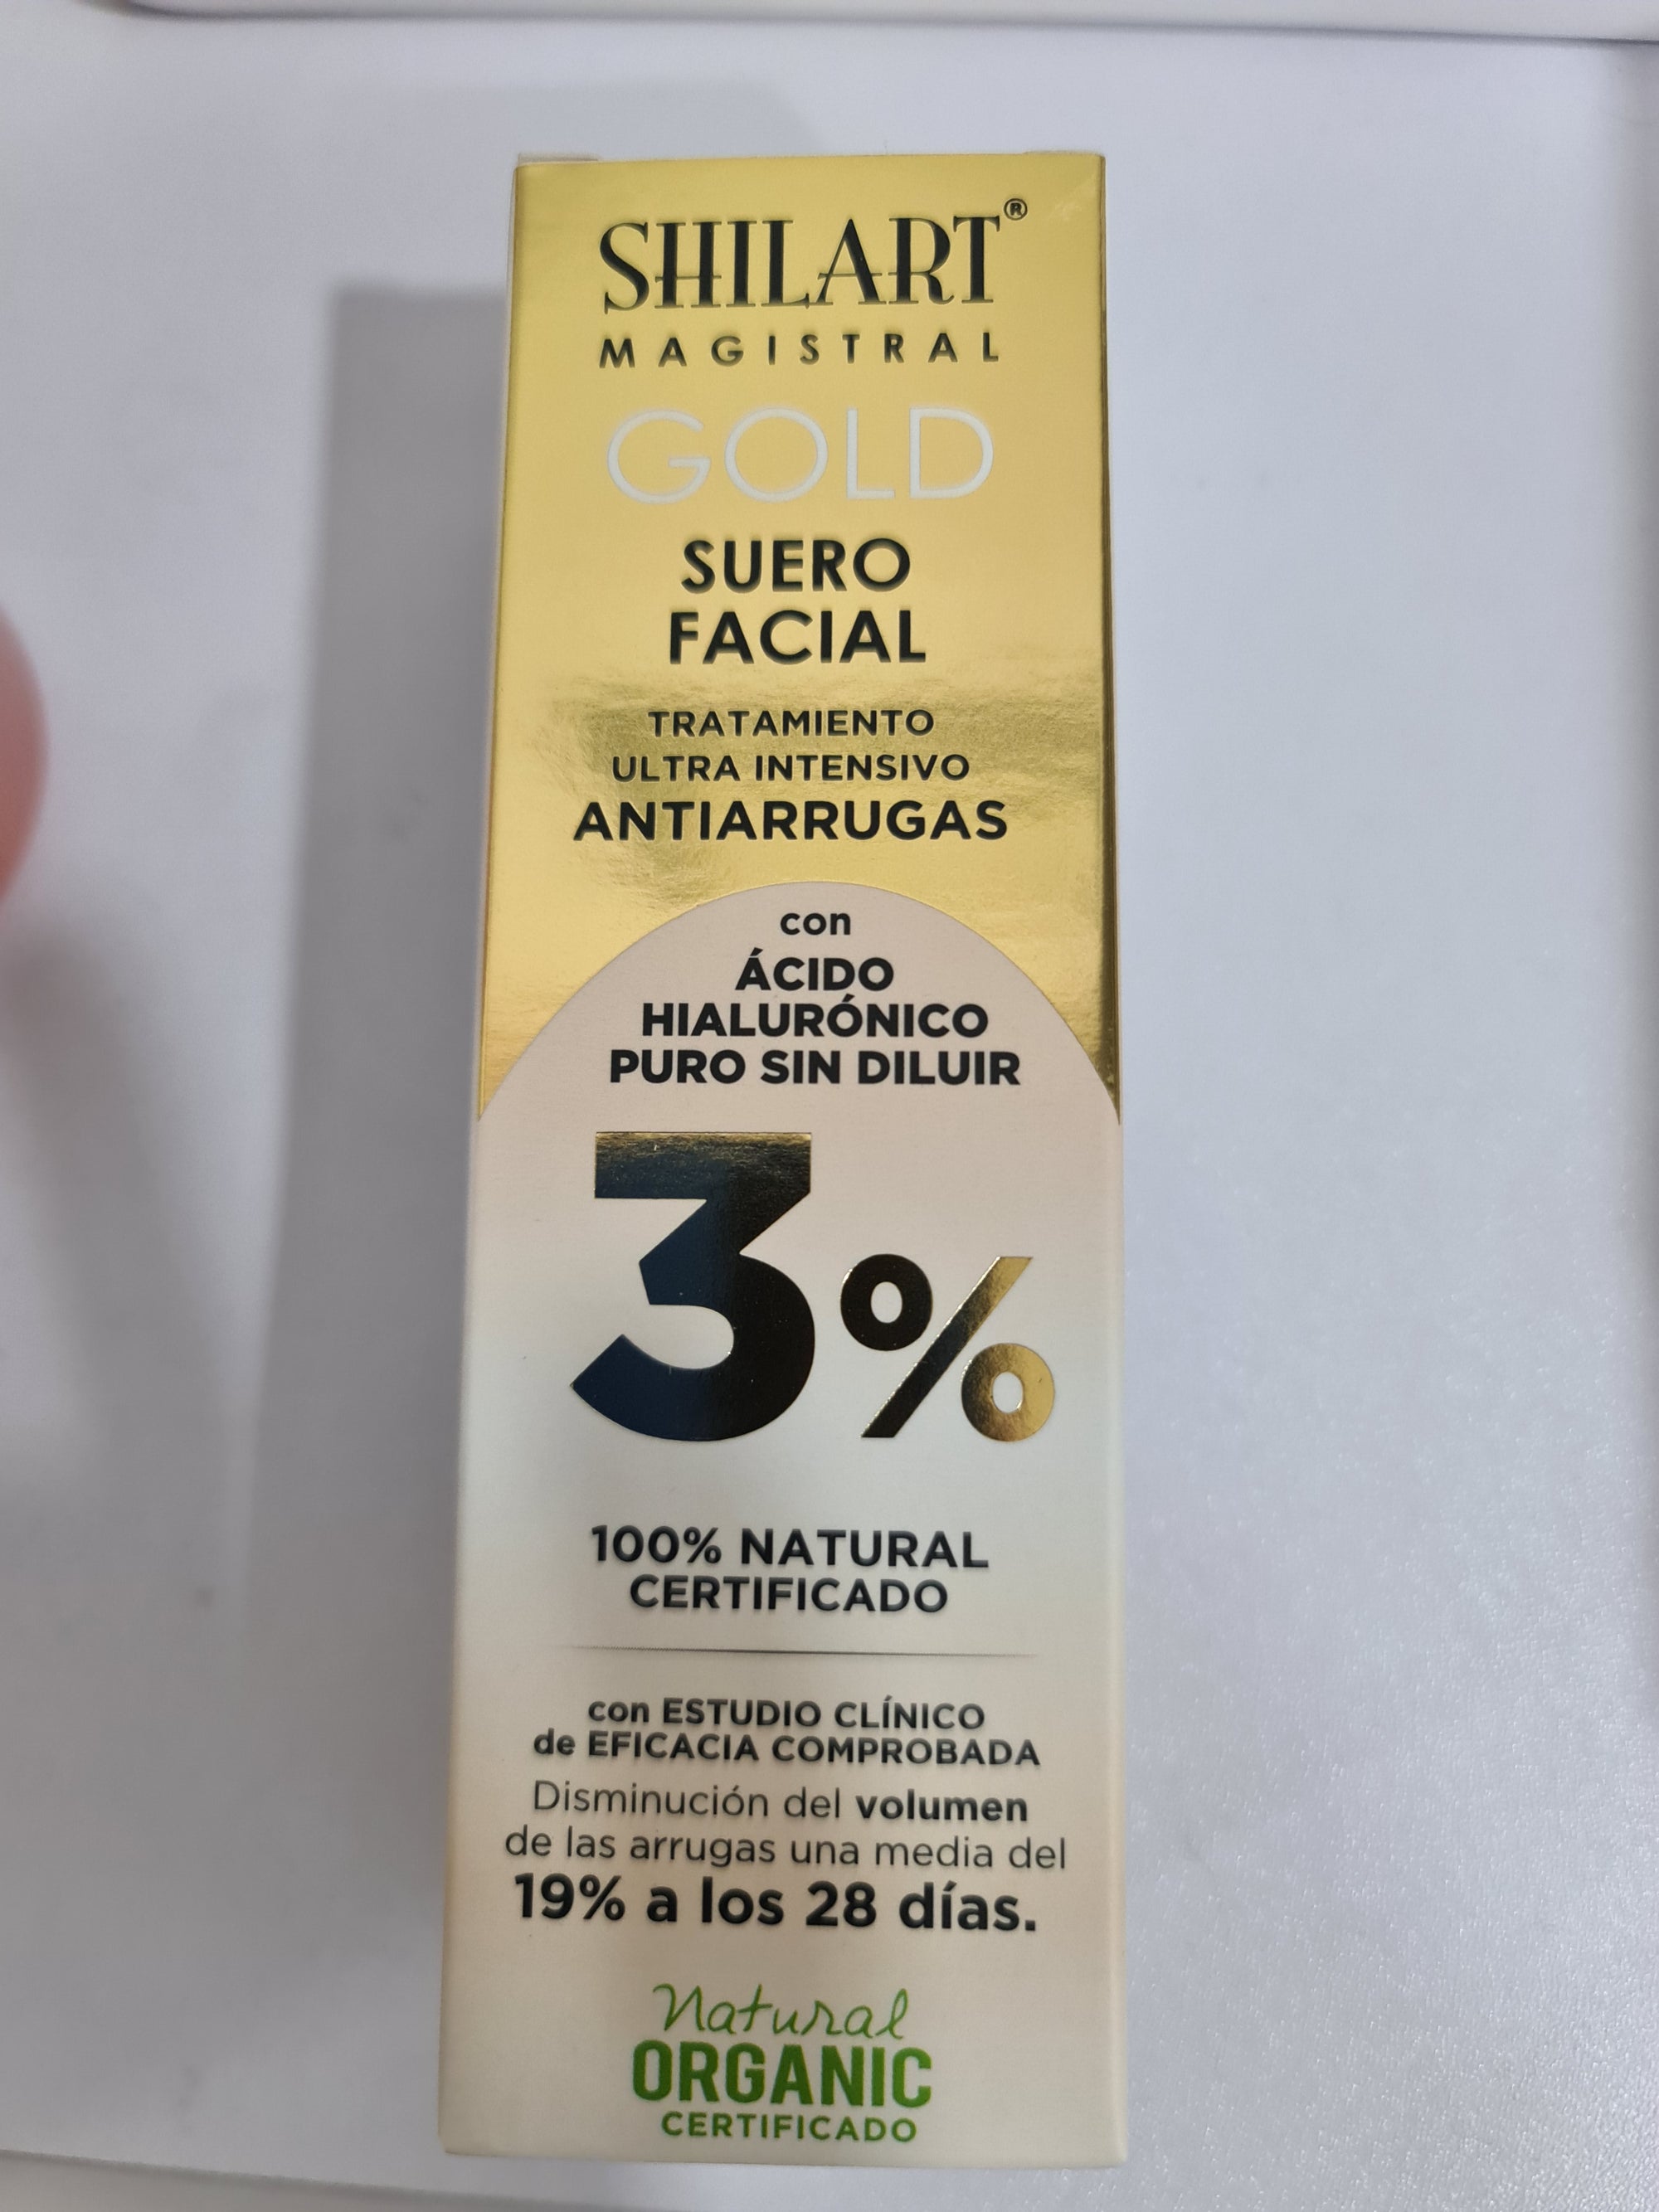 Shilart Magistral Gold Suero facial al 3% - Centro de Estética Itziar y Mariángeles